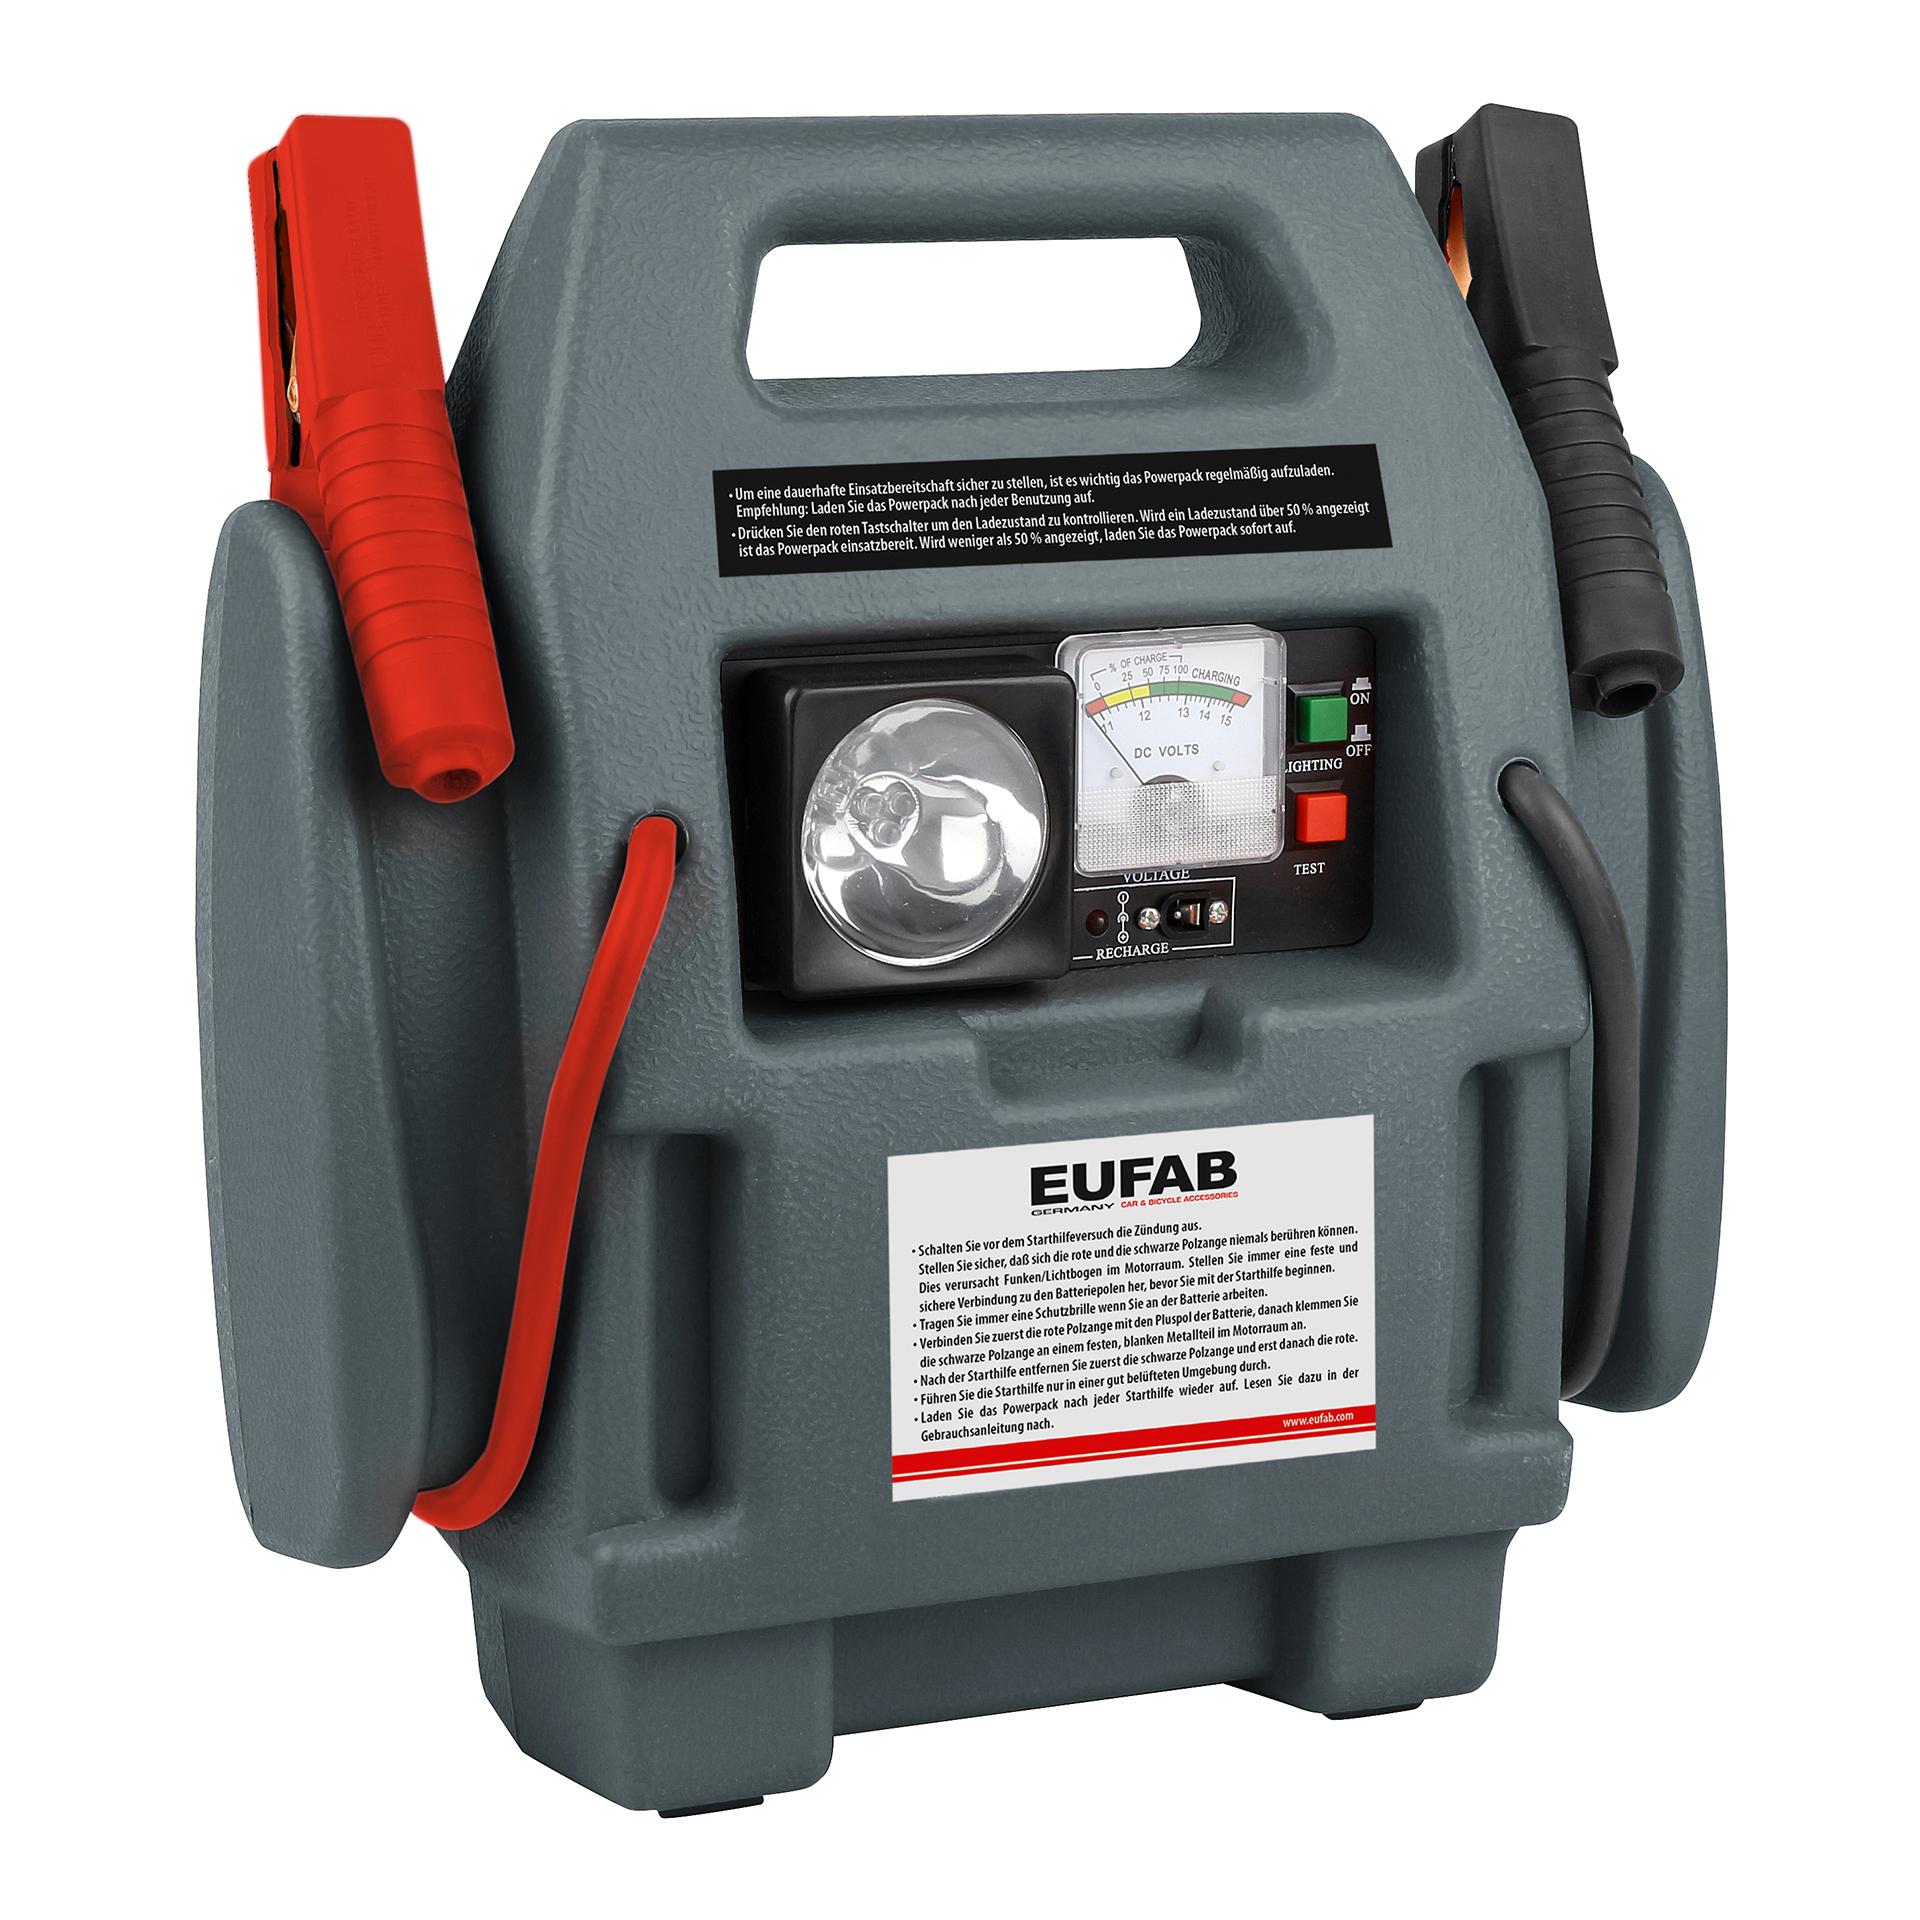 EUFAB Powerpack mit Kompressor 7Ah - Schwarz